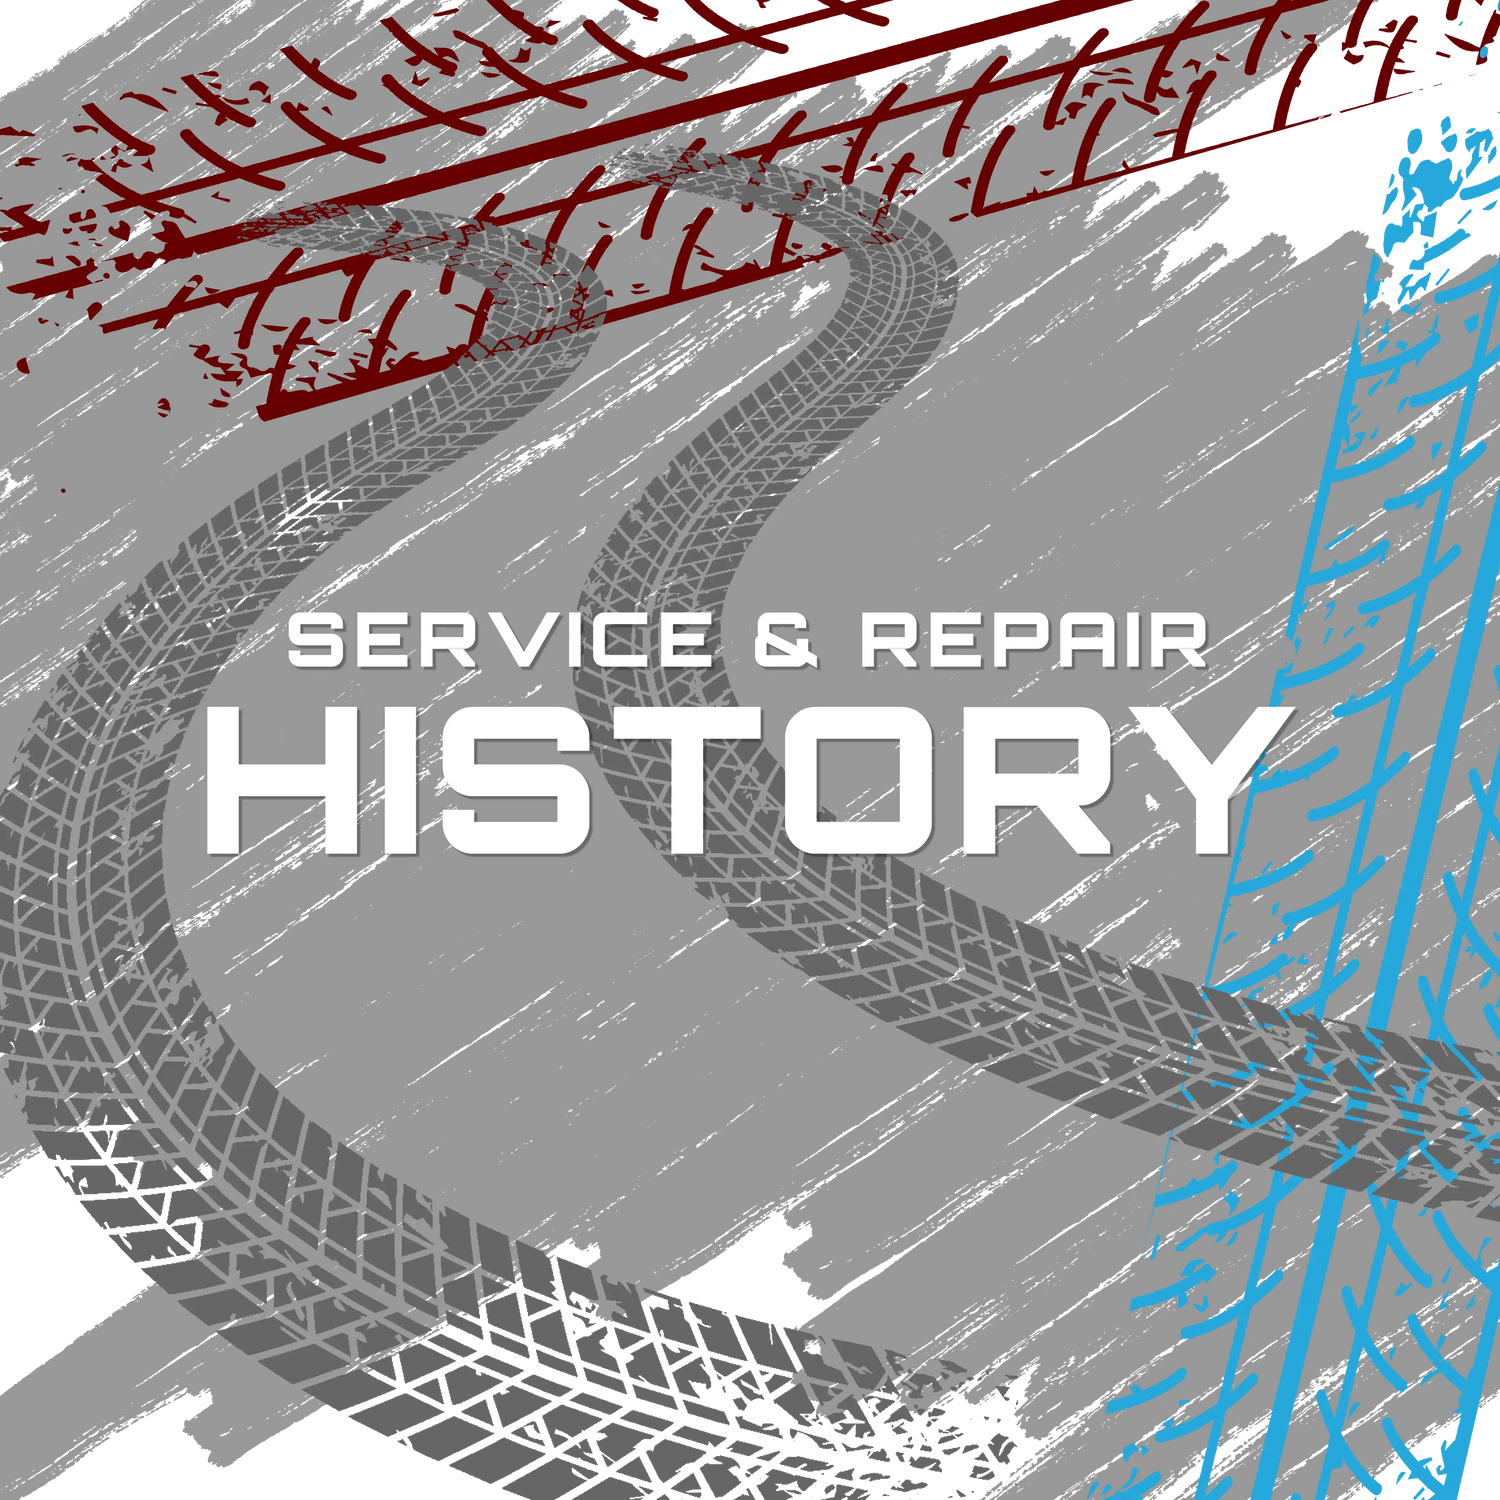 SERVICE & REPAIR HISTORY